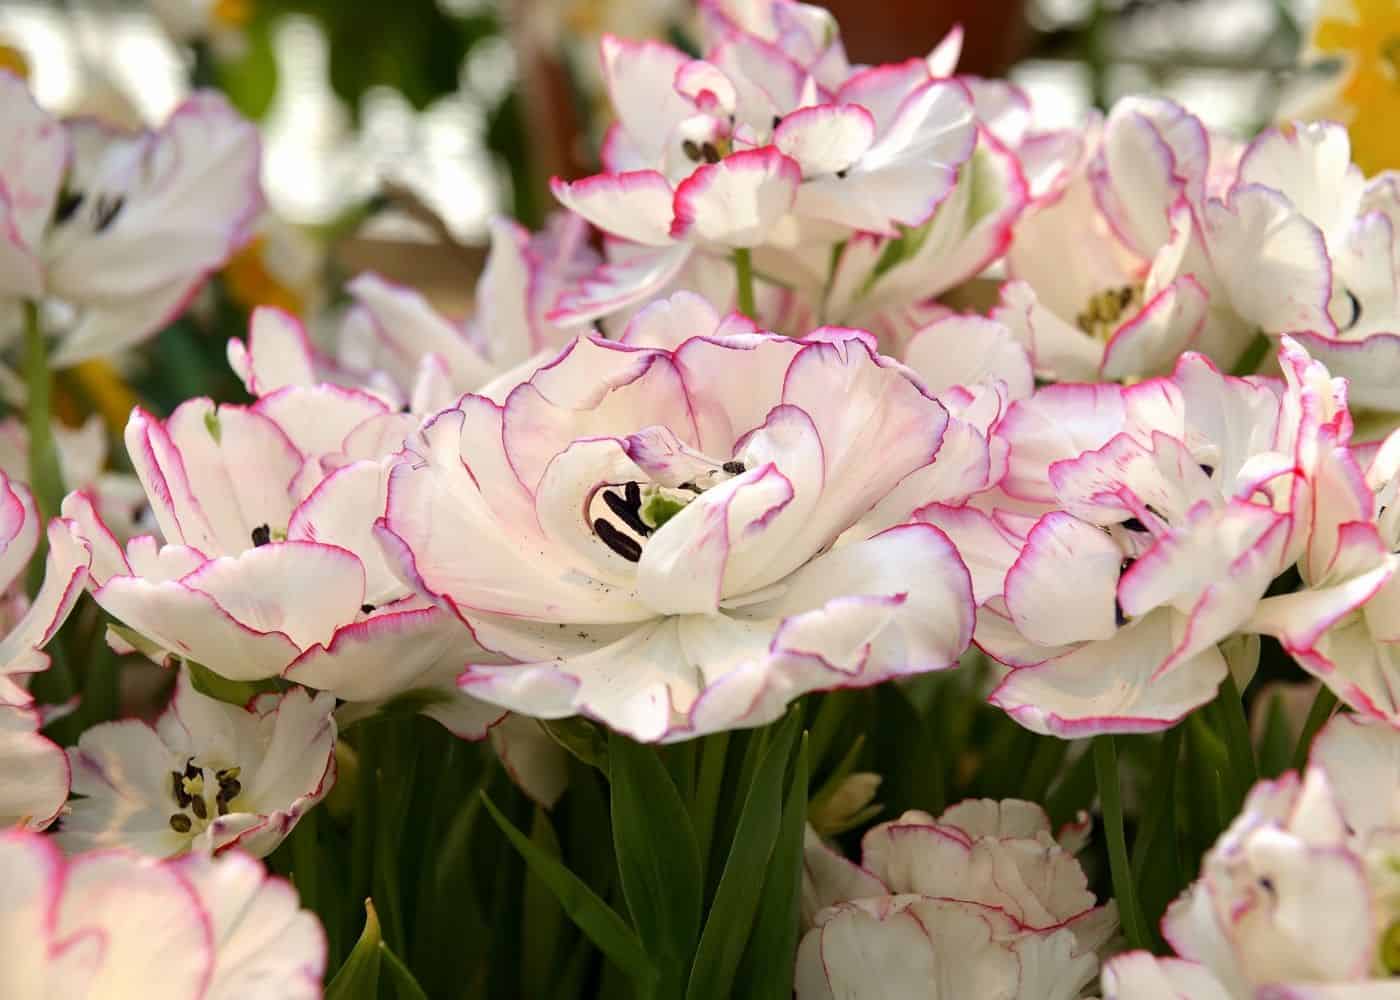 Danceline white tulips